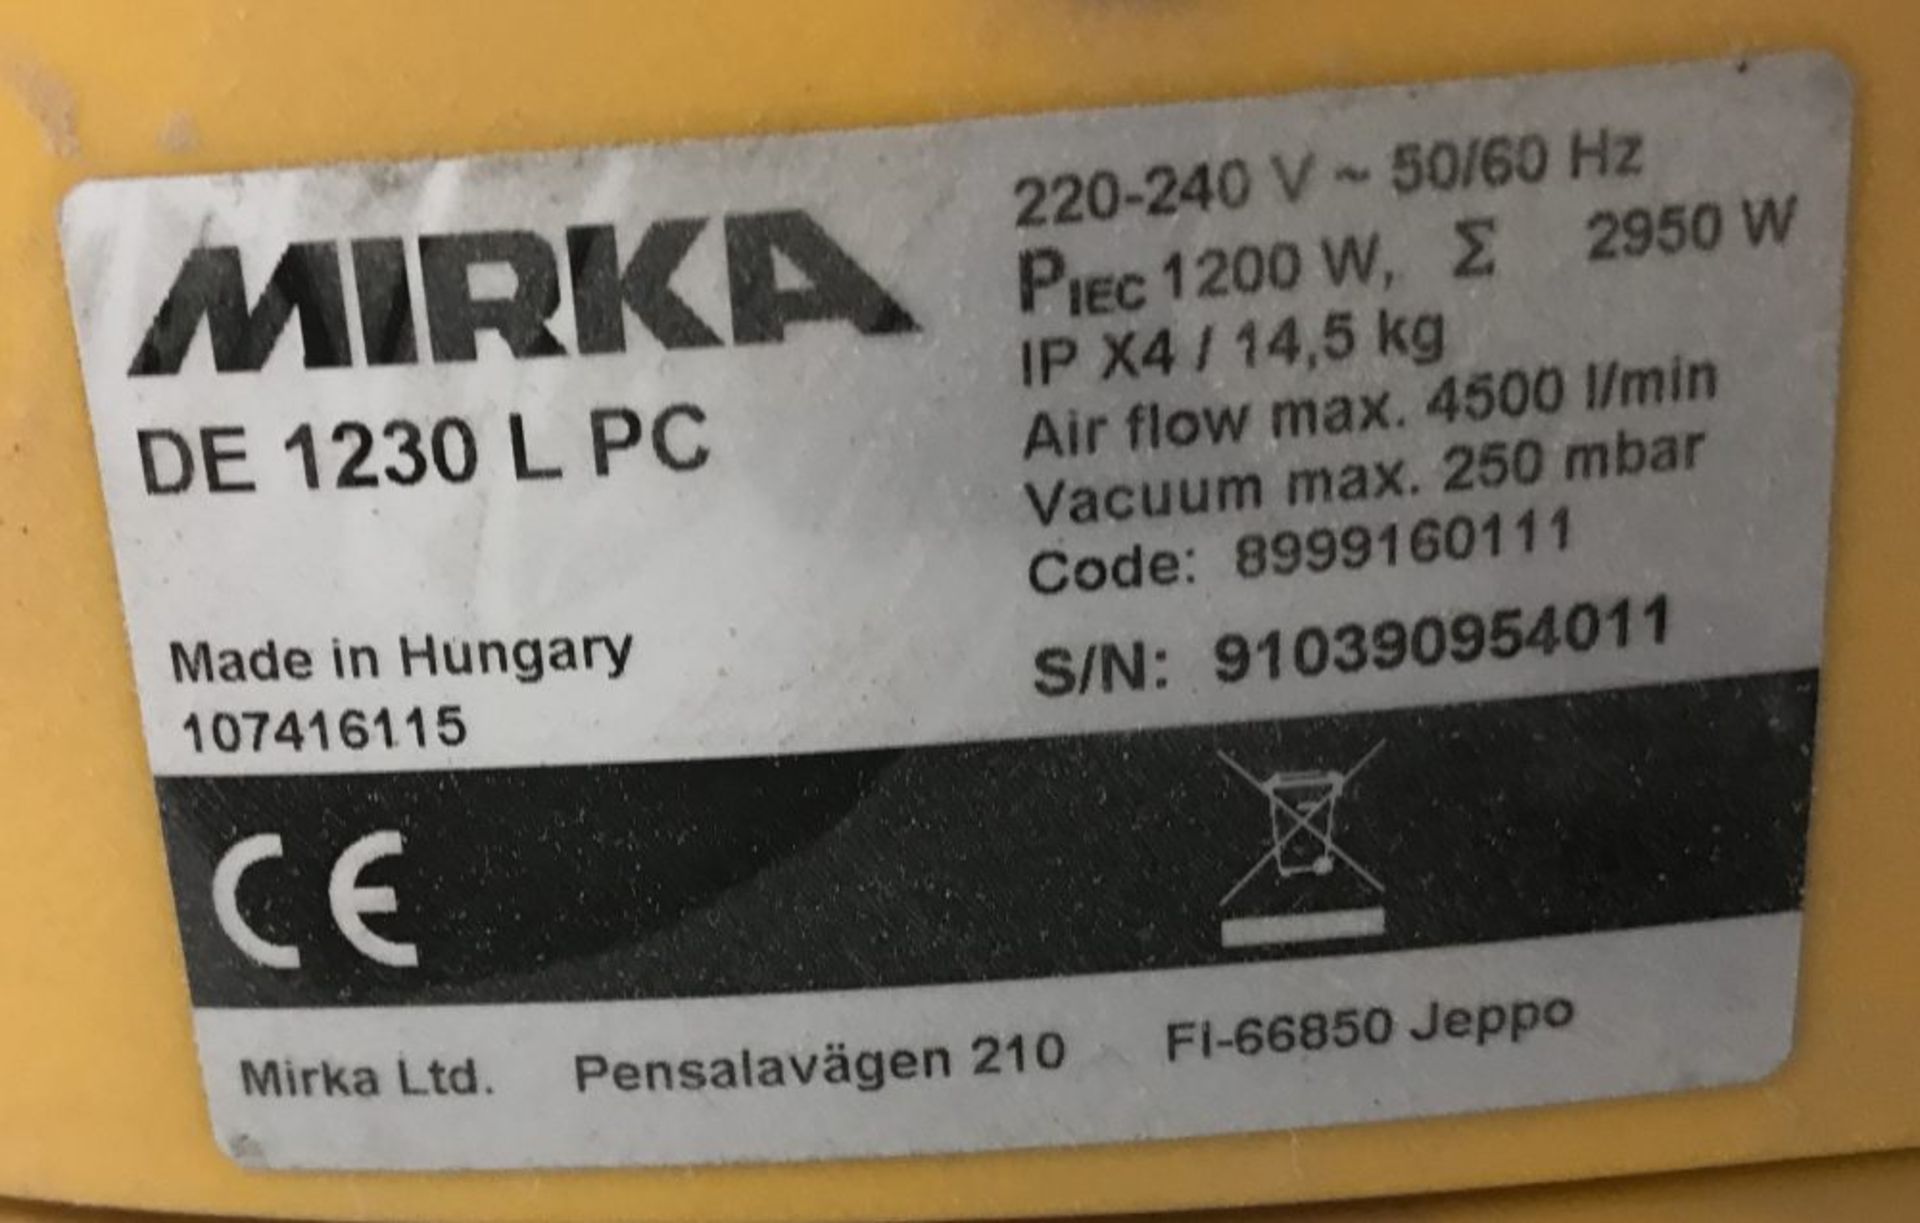 3 Mirka PROS 650CV sanders with Mirka DE 1230 L PC extractors - Image 10 of 16